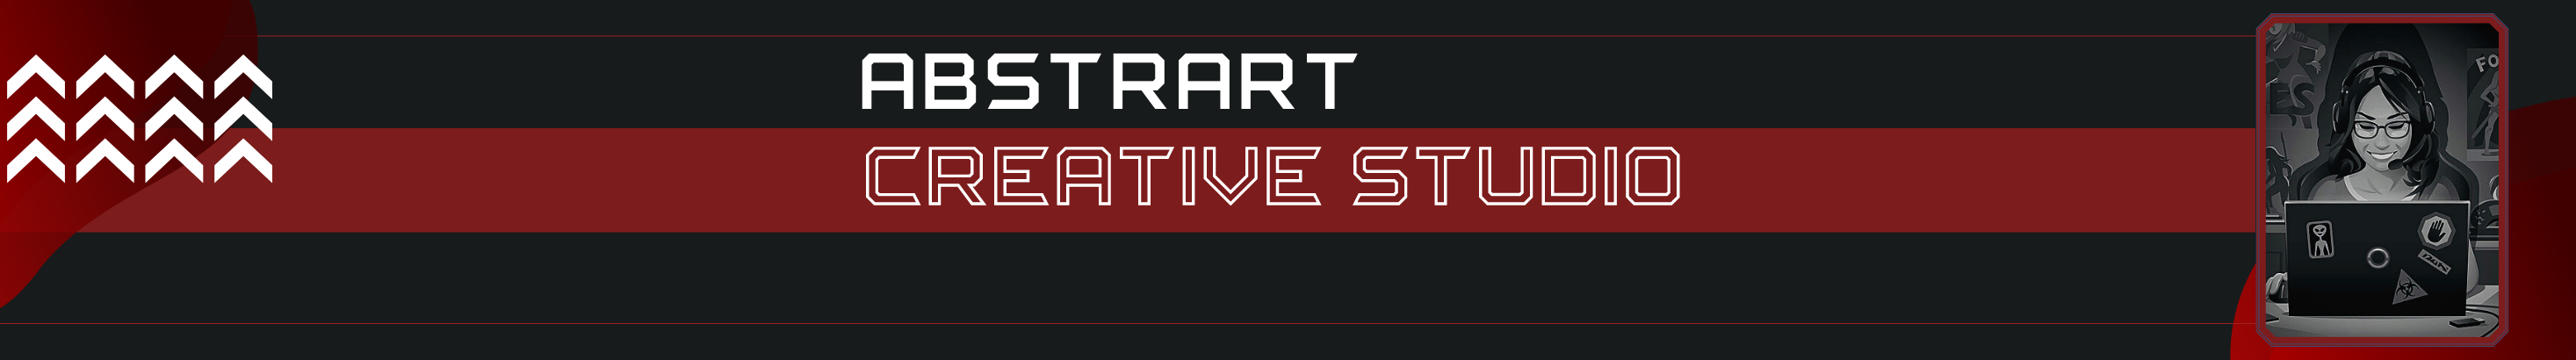 AbstrART Creative Studios profilbanner